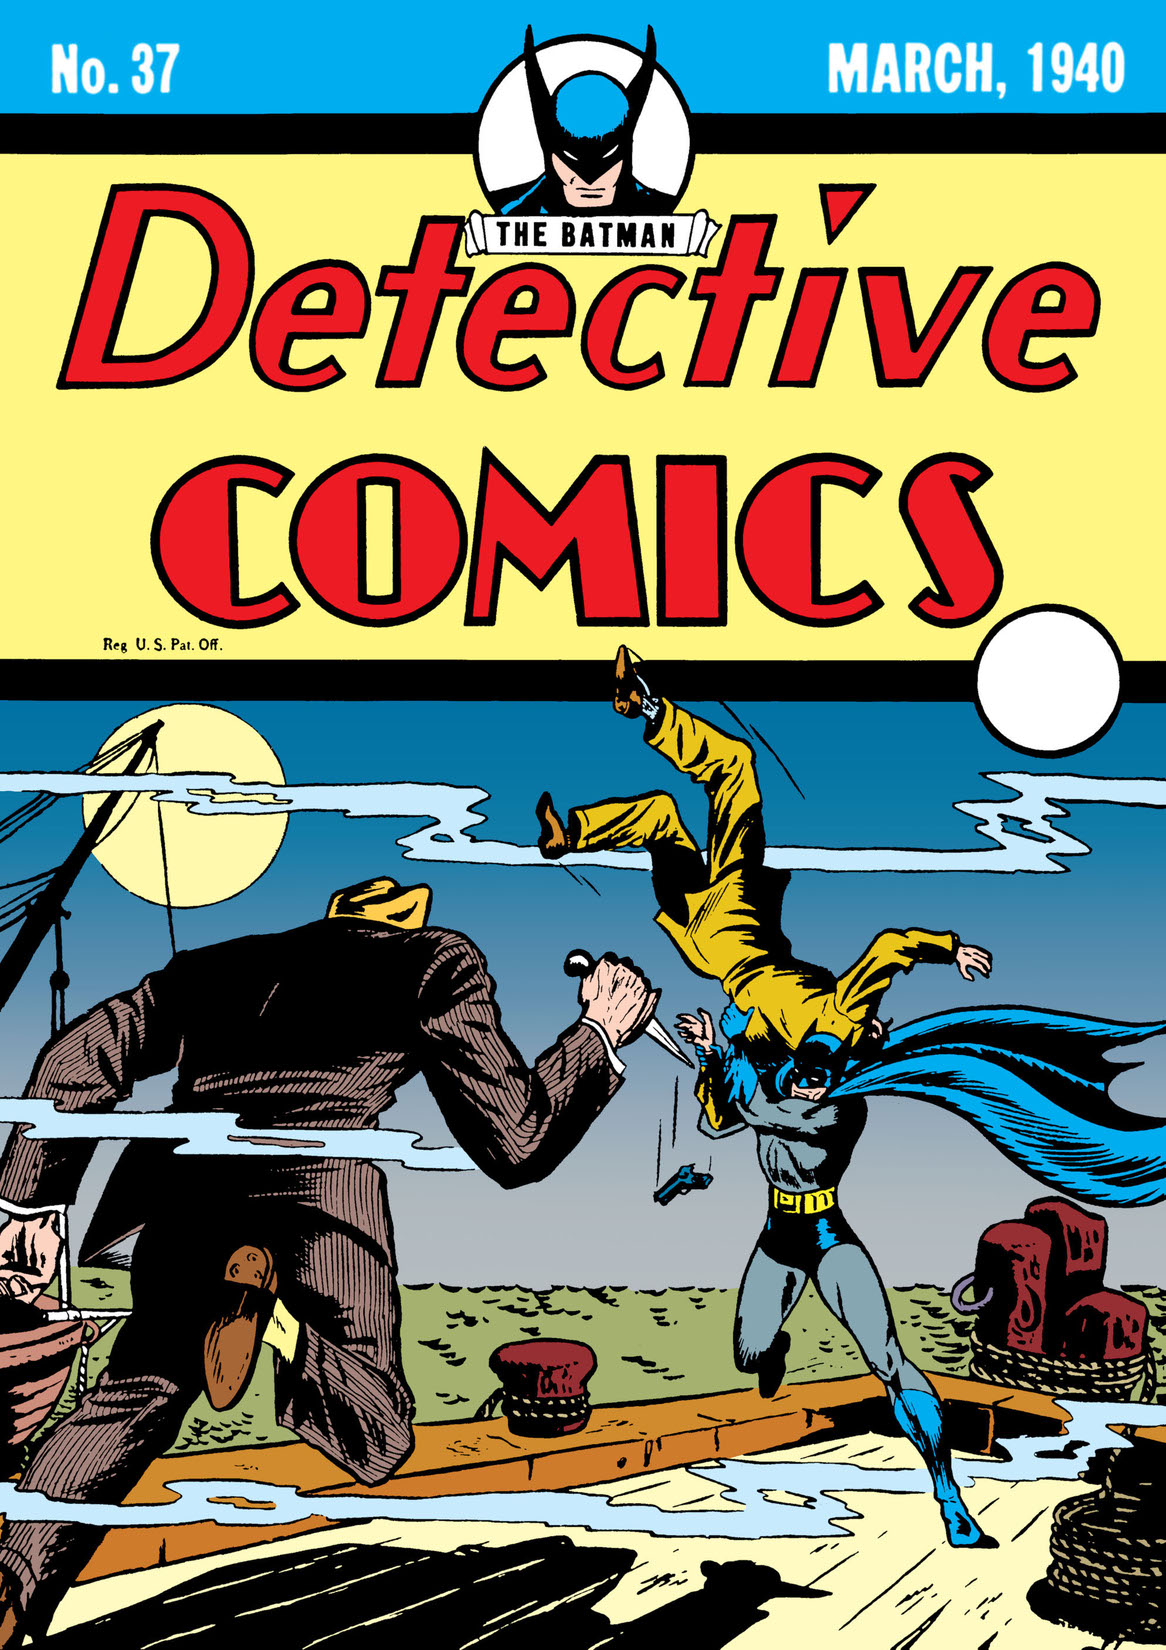 Detective Comics (1937-) #37 preview images